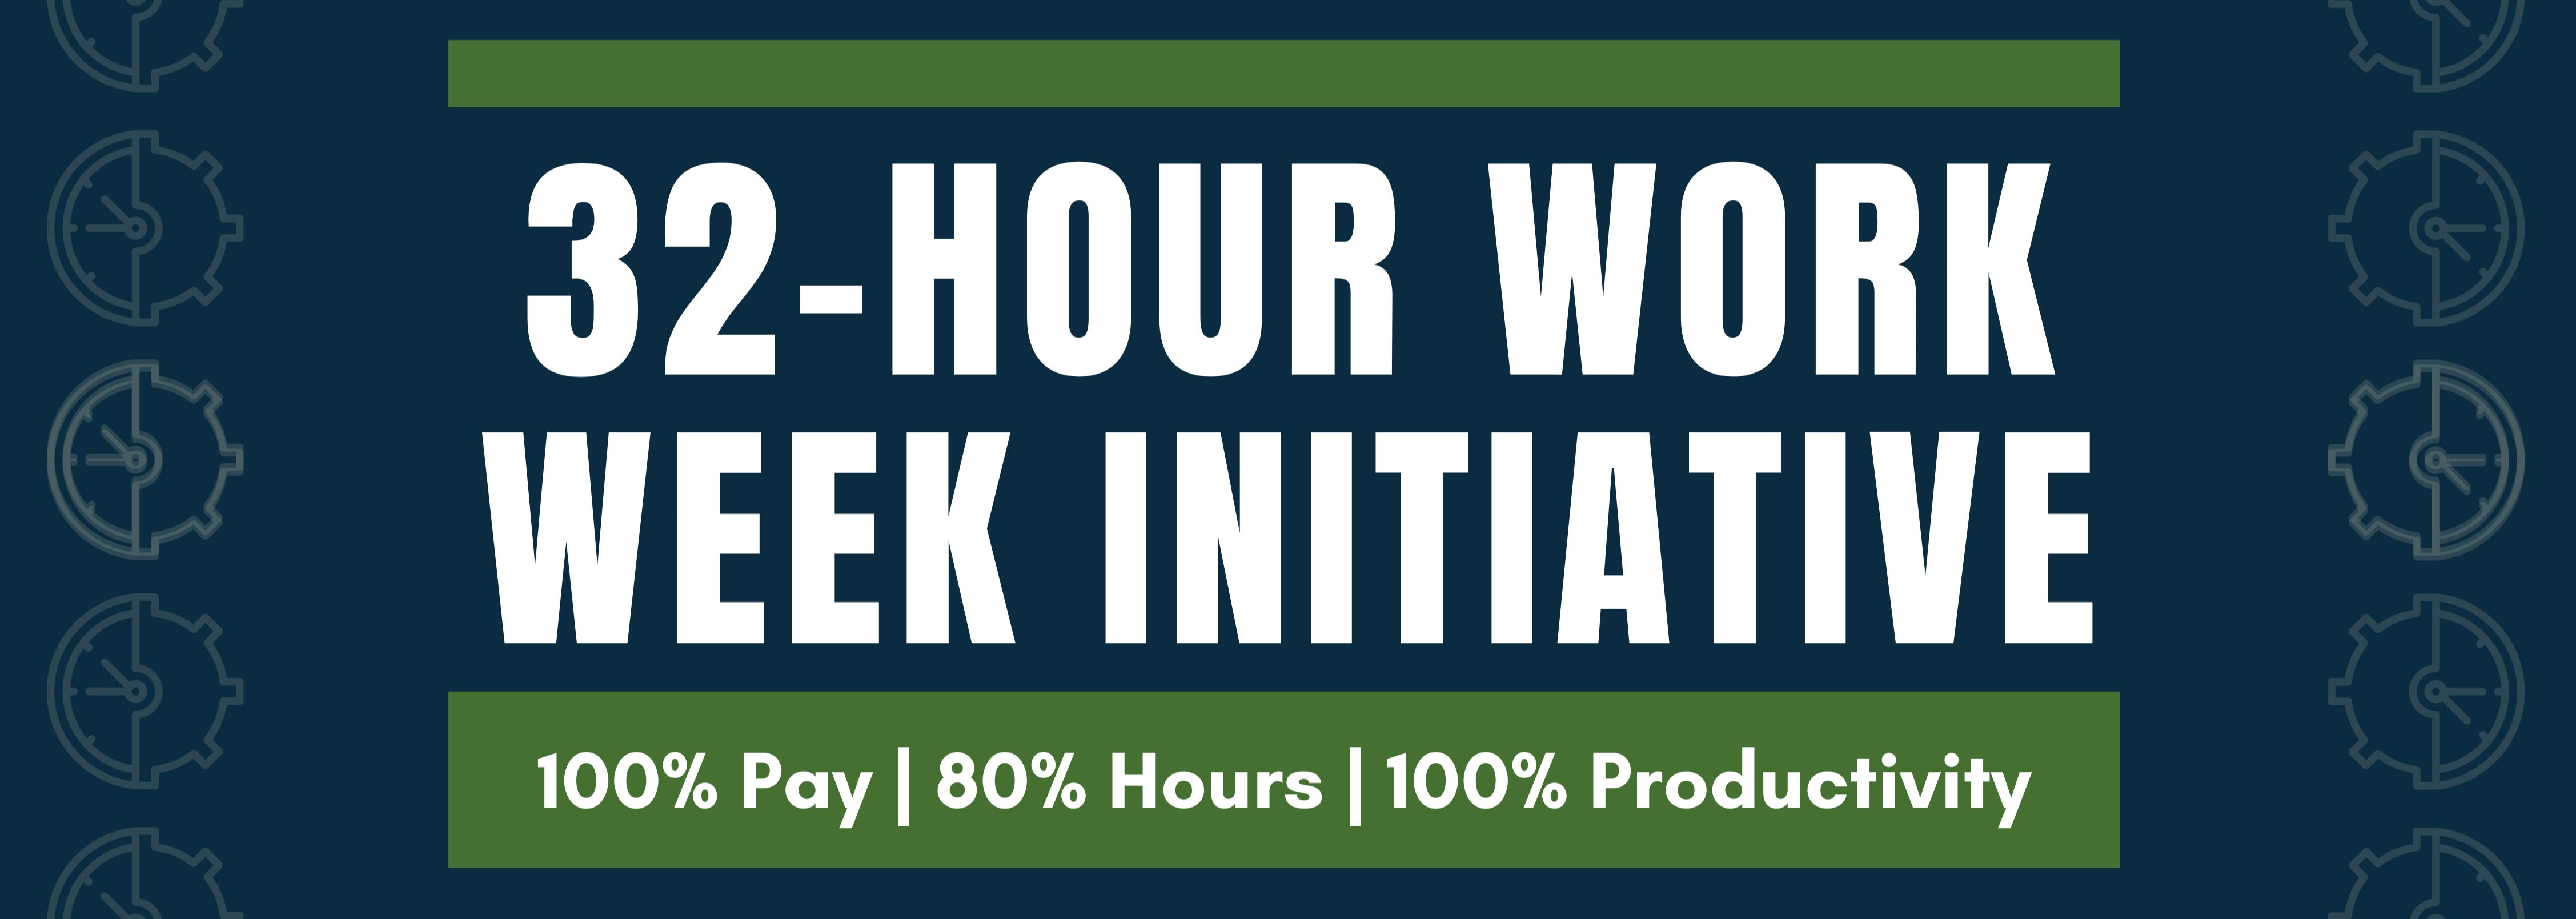 32-hour work week initiative